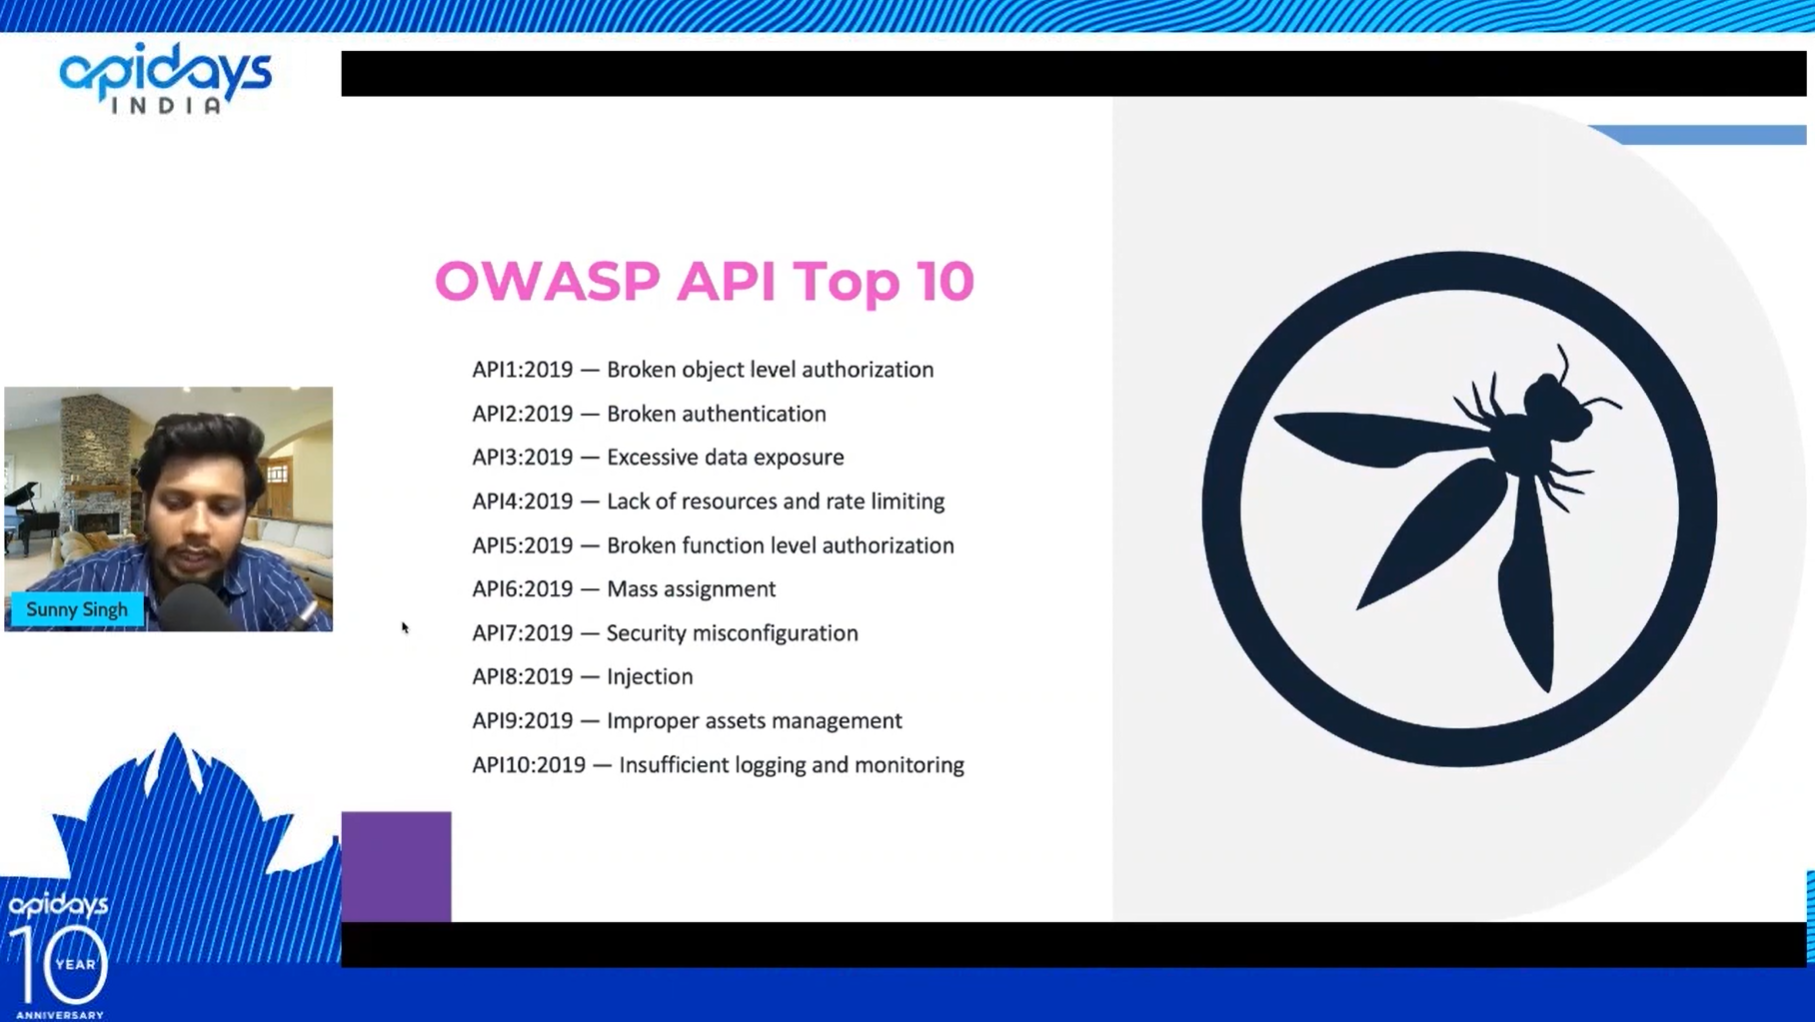 OWASP Top 10 API Vulnerabilities